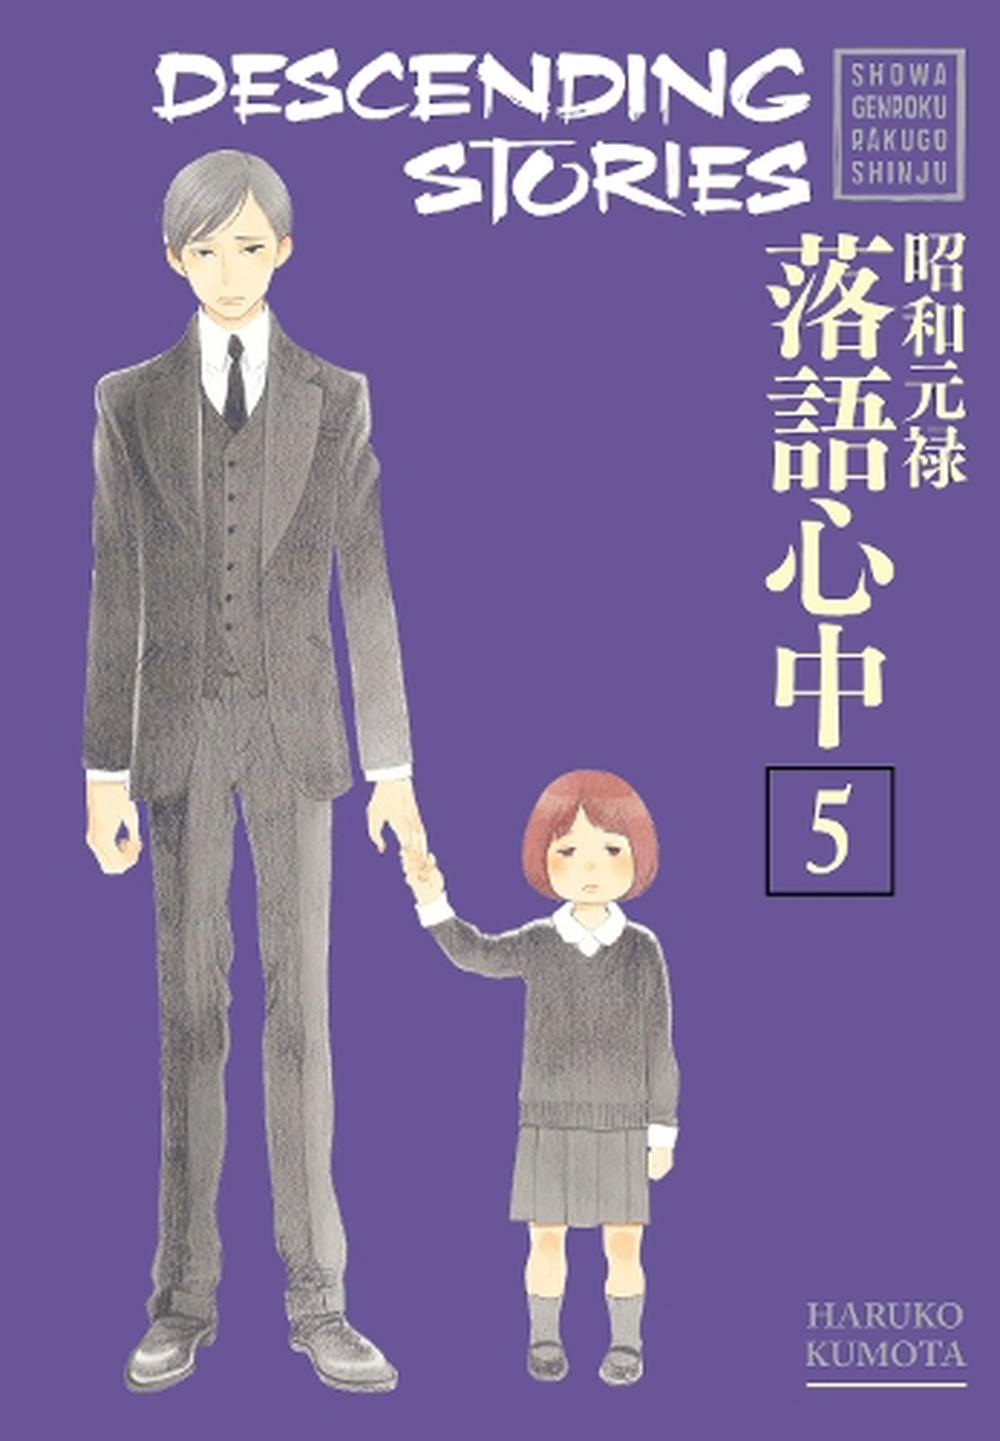 Descending Stories Showa Genroku Rakugo Shinju 5 By Haruko Kumota Paperback Buy Online At Moby The Great